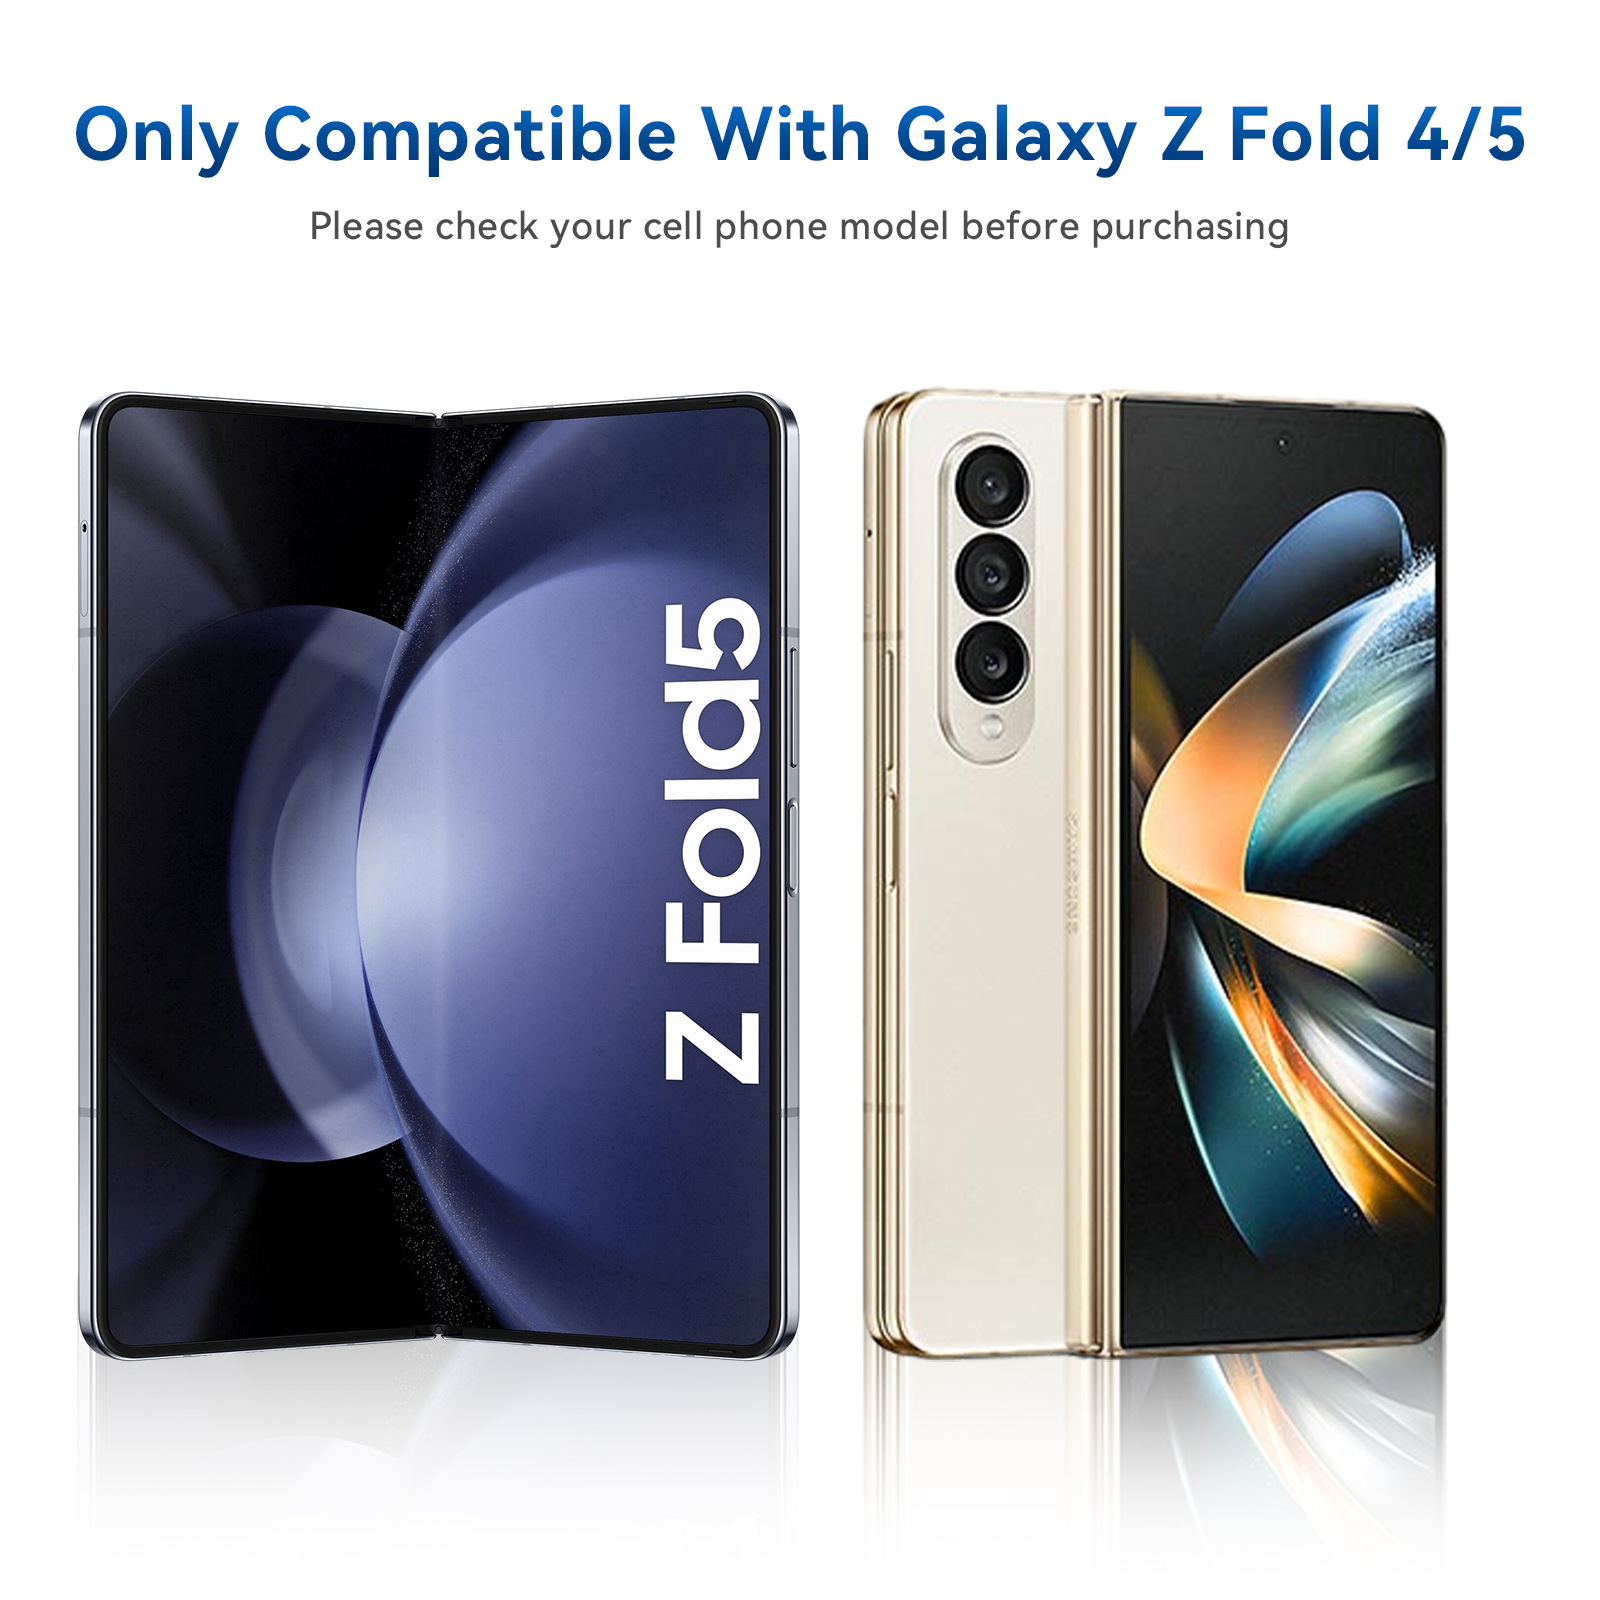 Stylus Pen for Samsung Galaxy Z Fold5